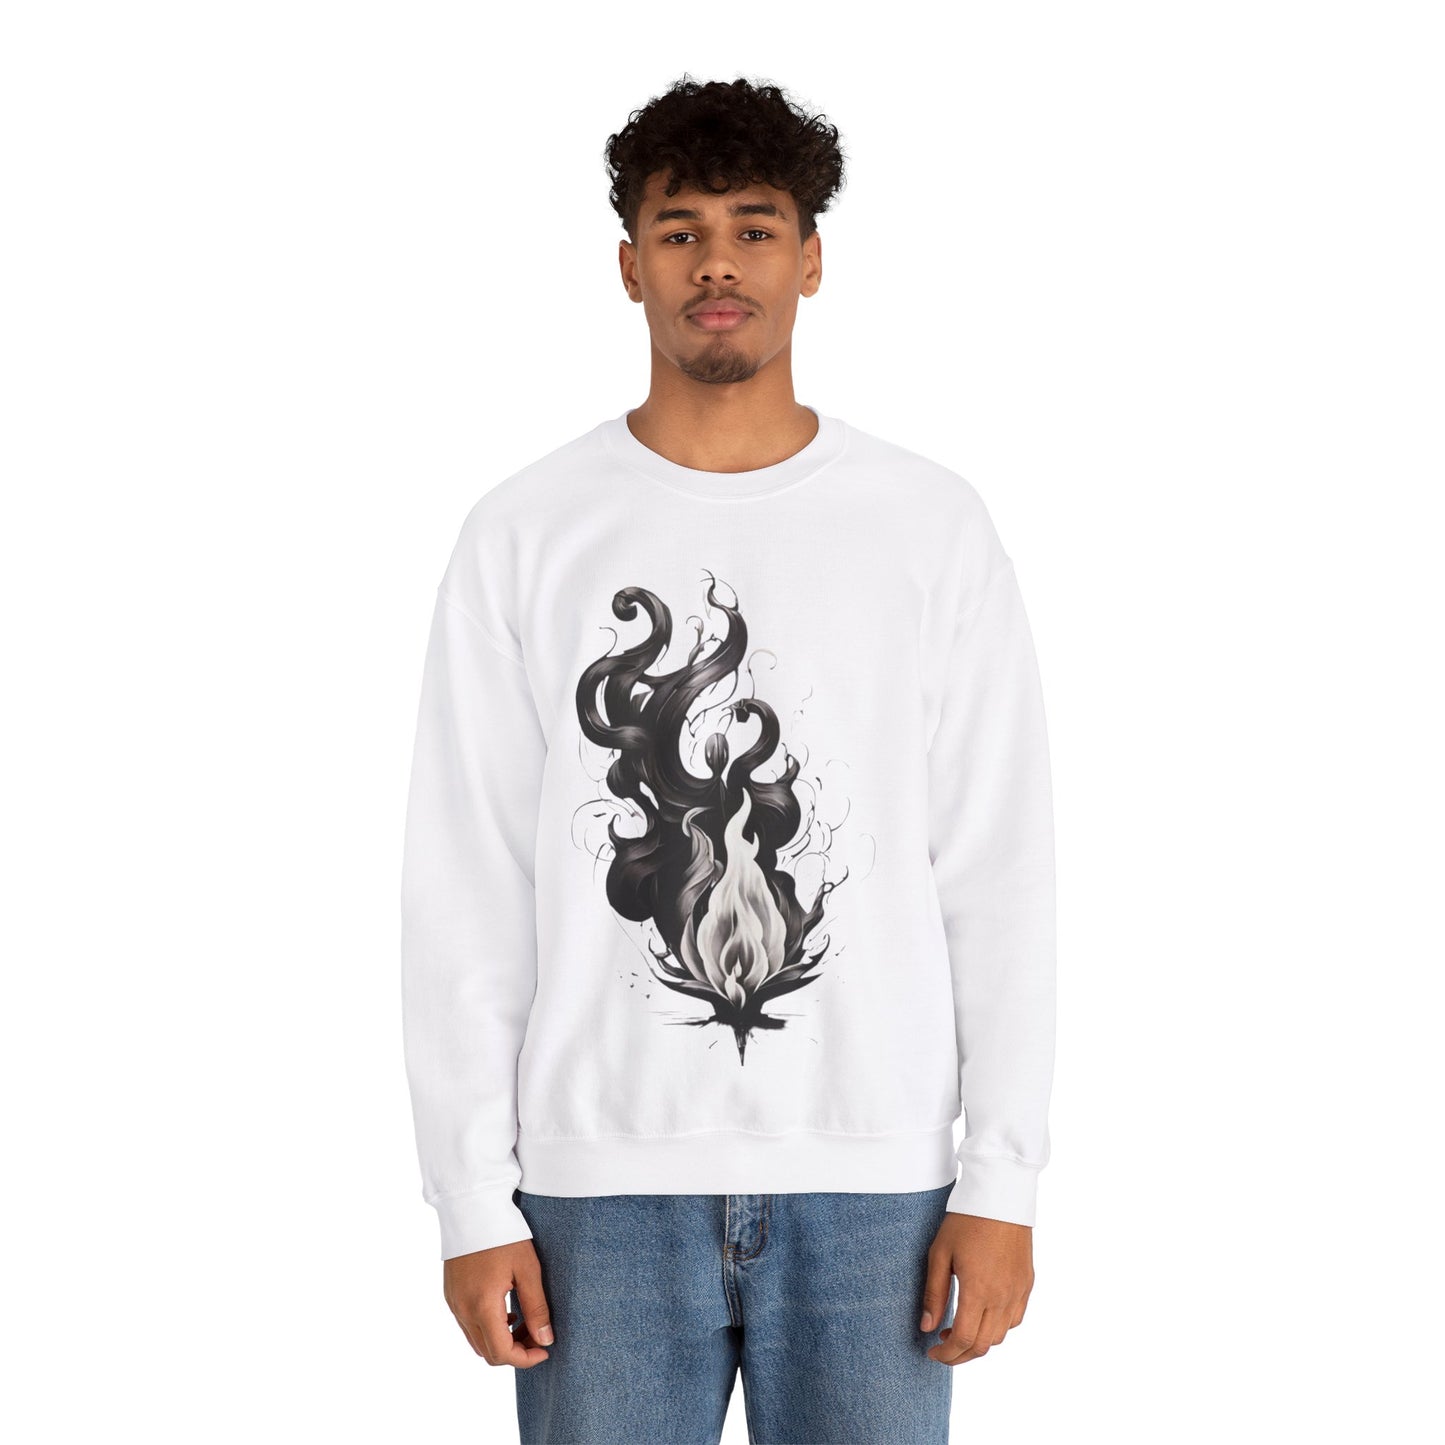 Black and White Flame - Unisex Crewneck Sweatshirt